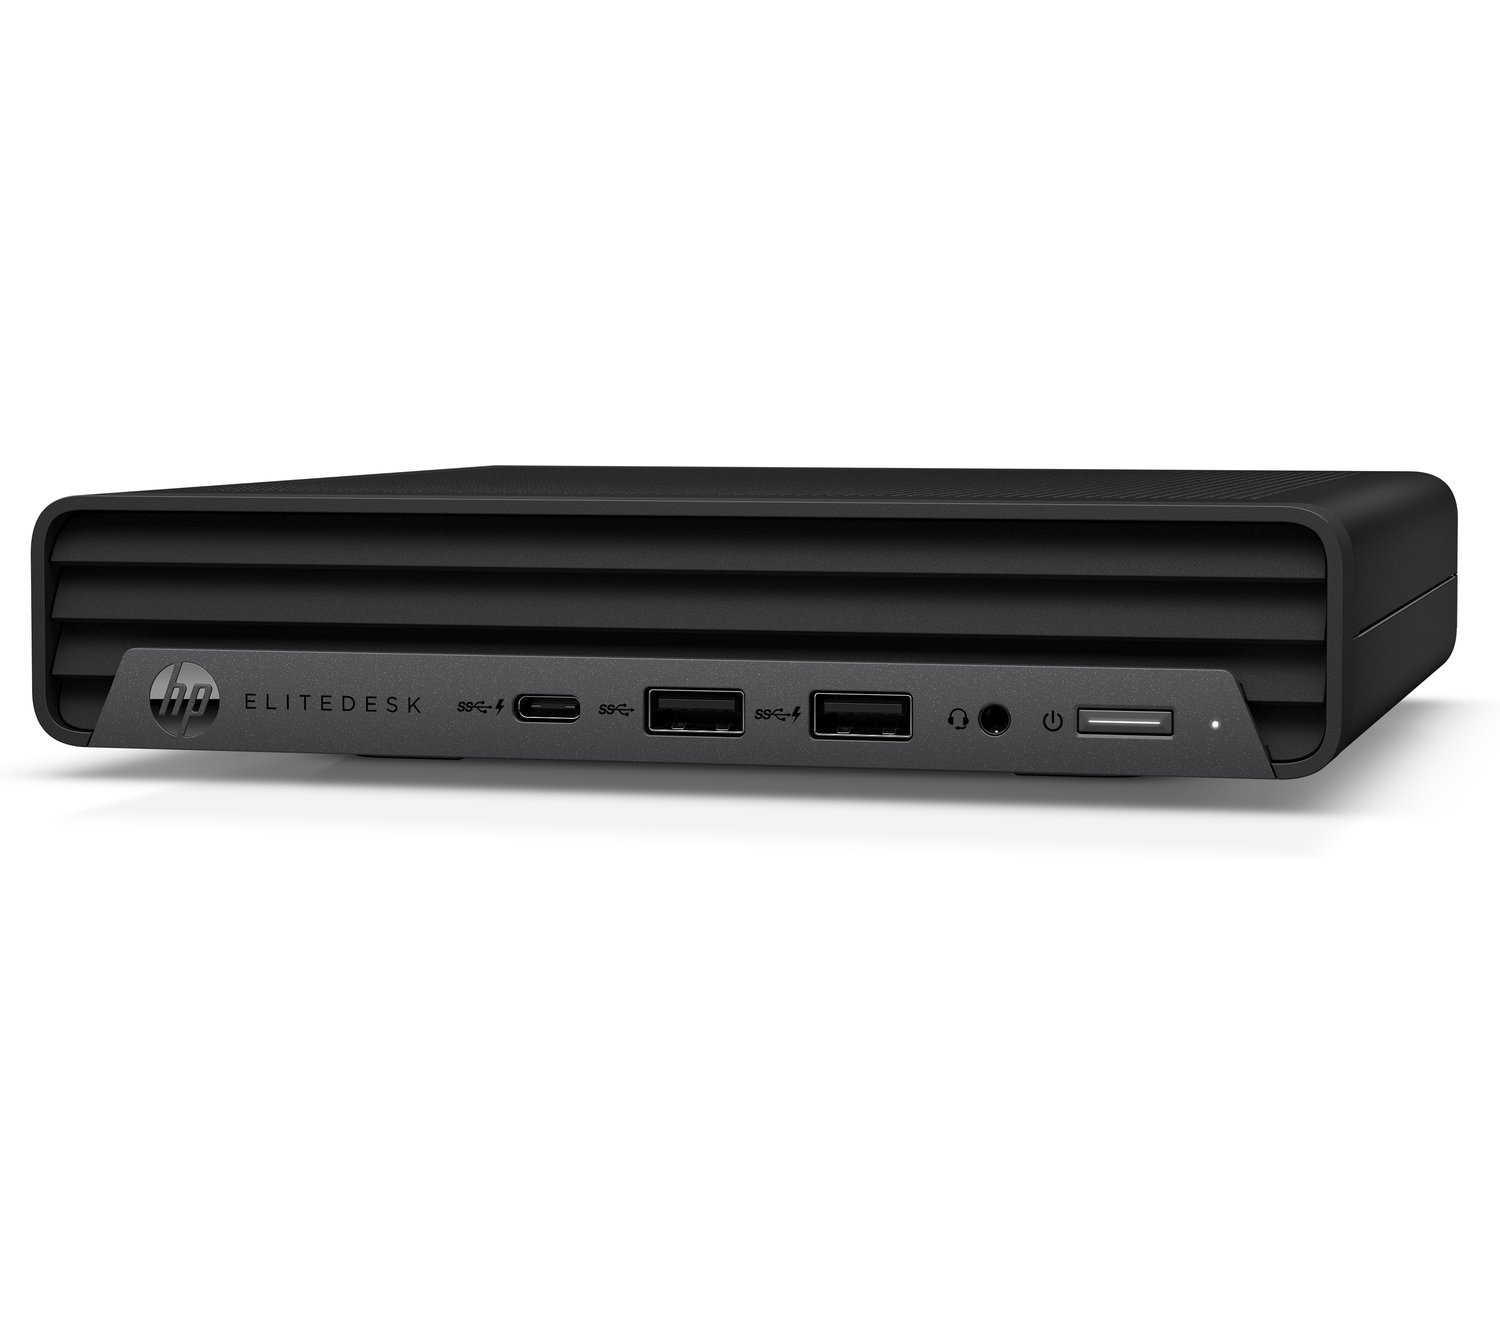 HP EliteDesk 800 G6 Mini i5-10500T 3.8GHz 16GB RAM 256GB SSD WiFi Mini Form Factor Desktop with Windows 10 Pro